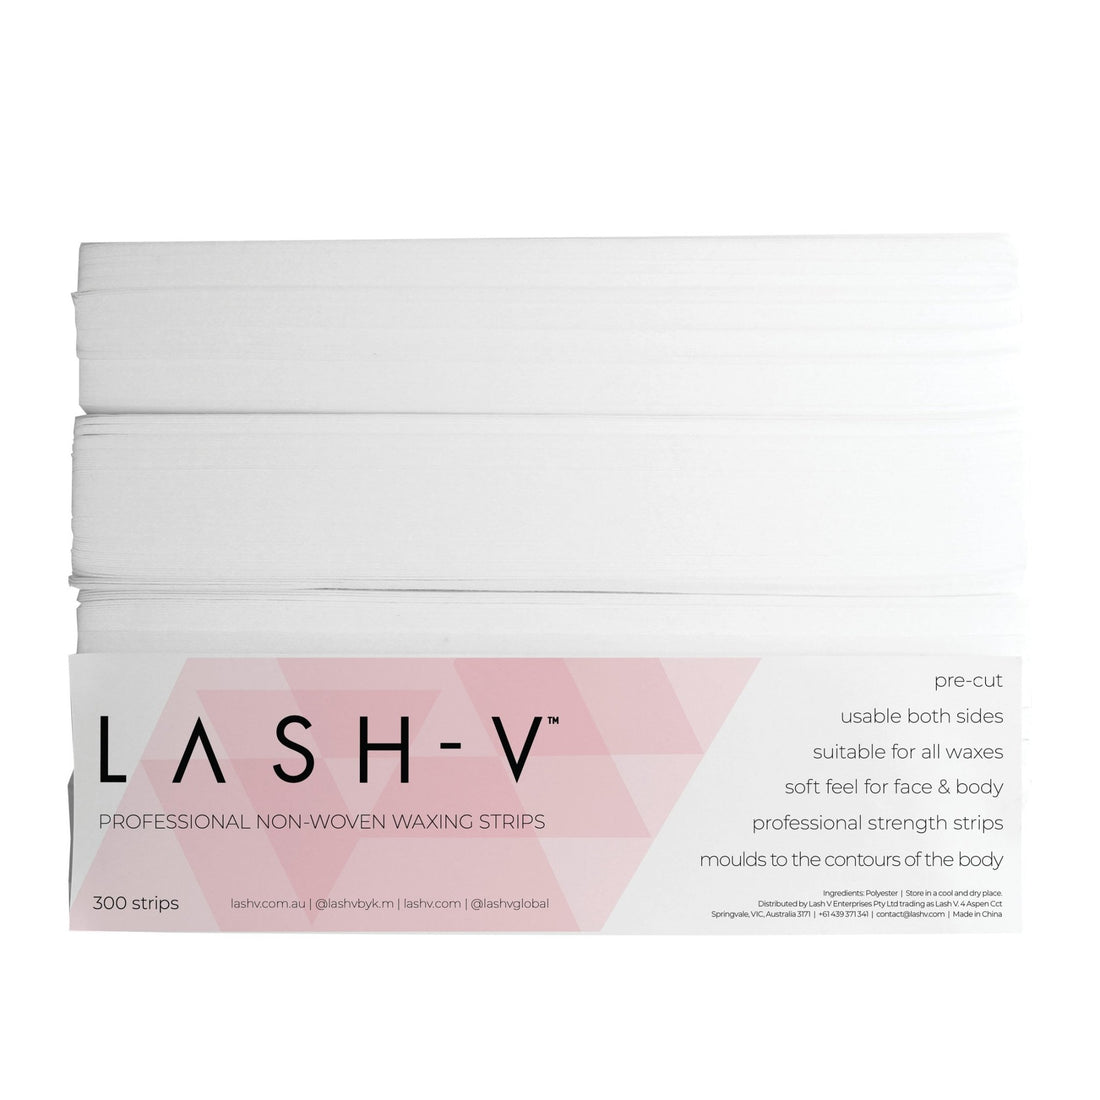 Professional Non-Woven Pre-Cut Waxing Strips | 300 Strips - LASH V